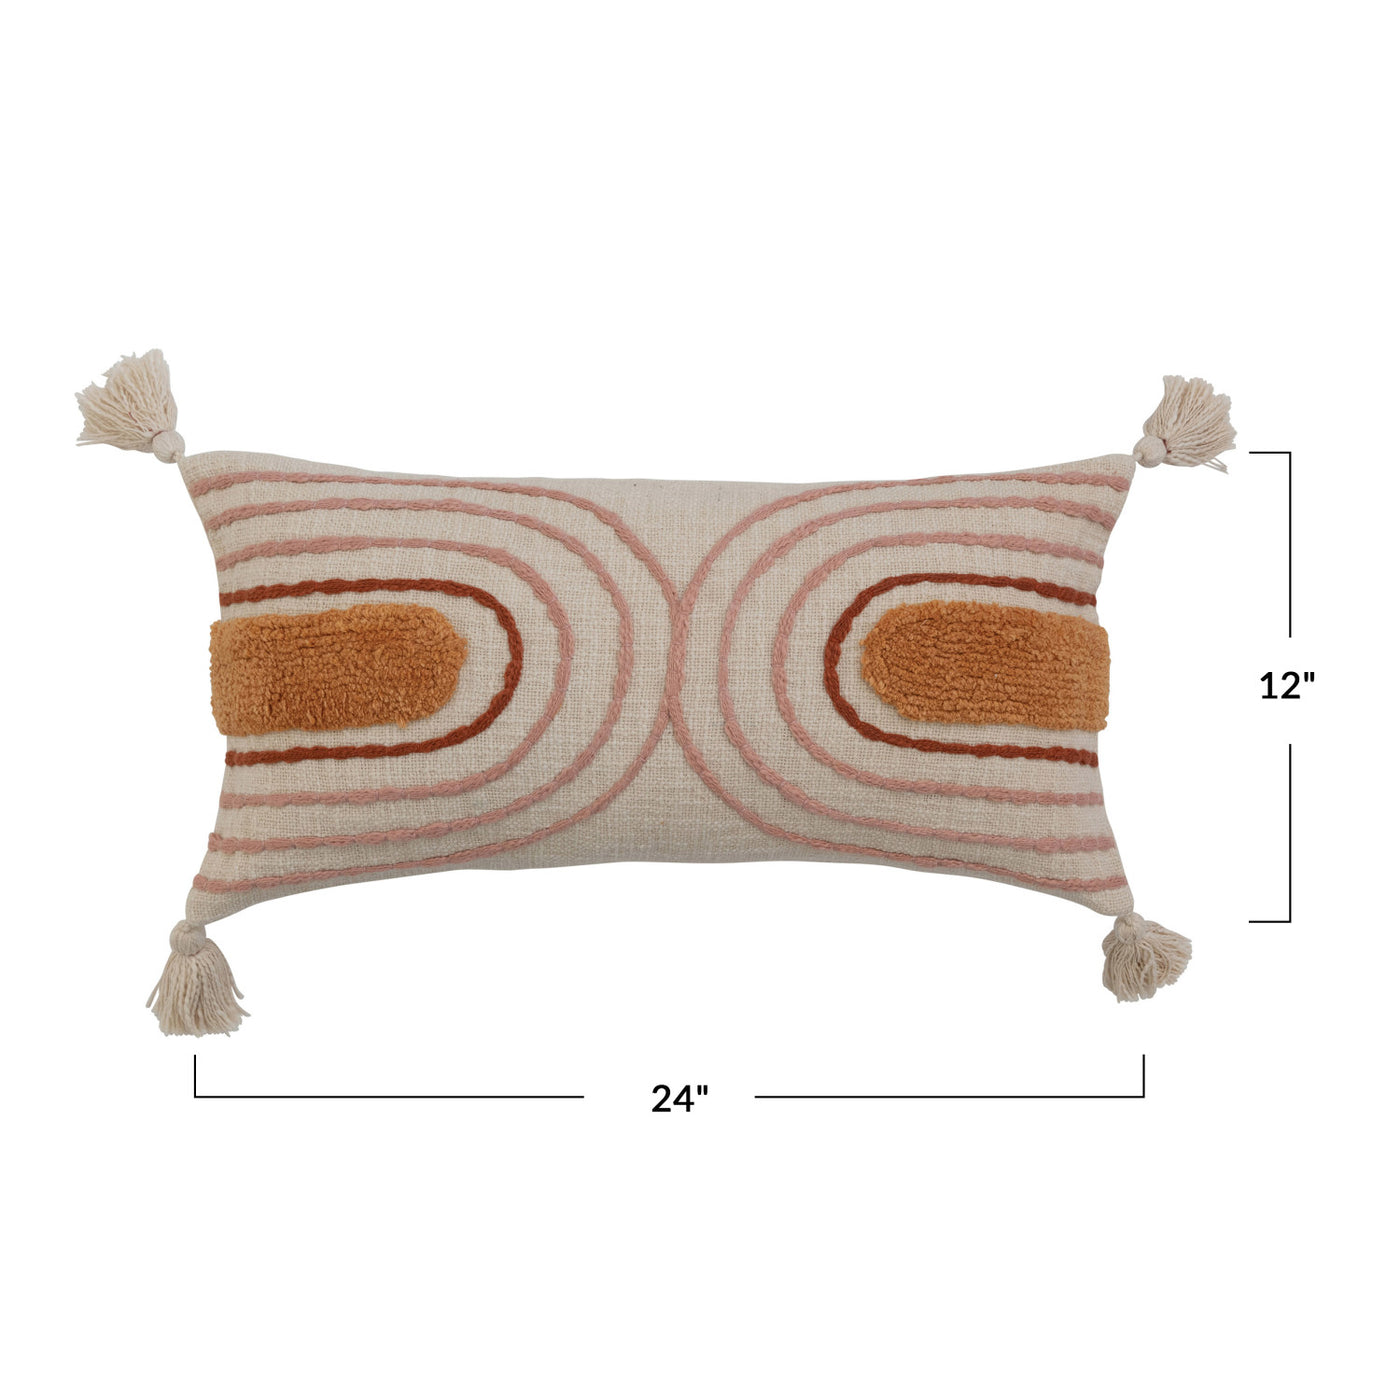 24" x 12" Cotton Tufted Lumbar Pillow w/ Tassels